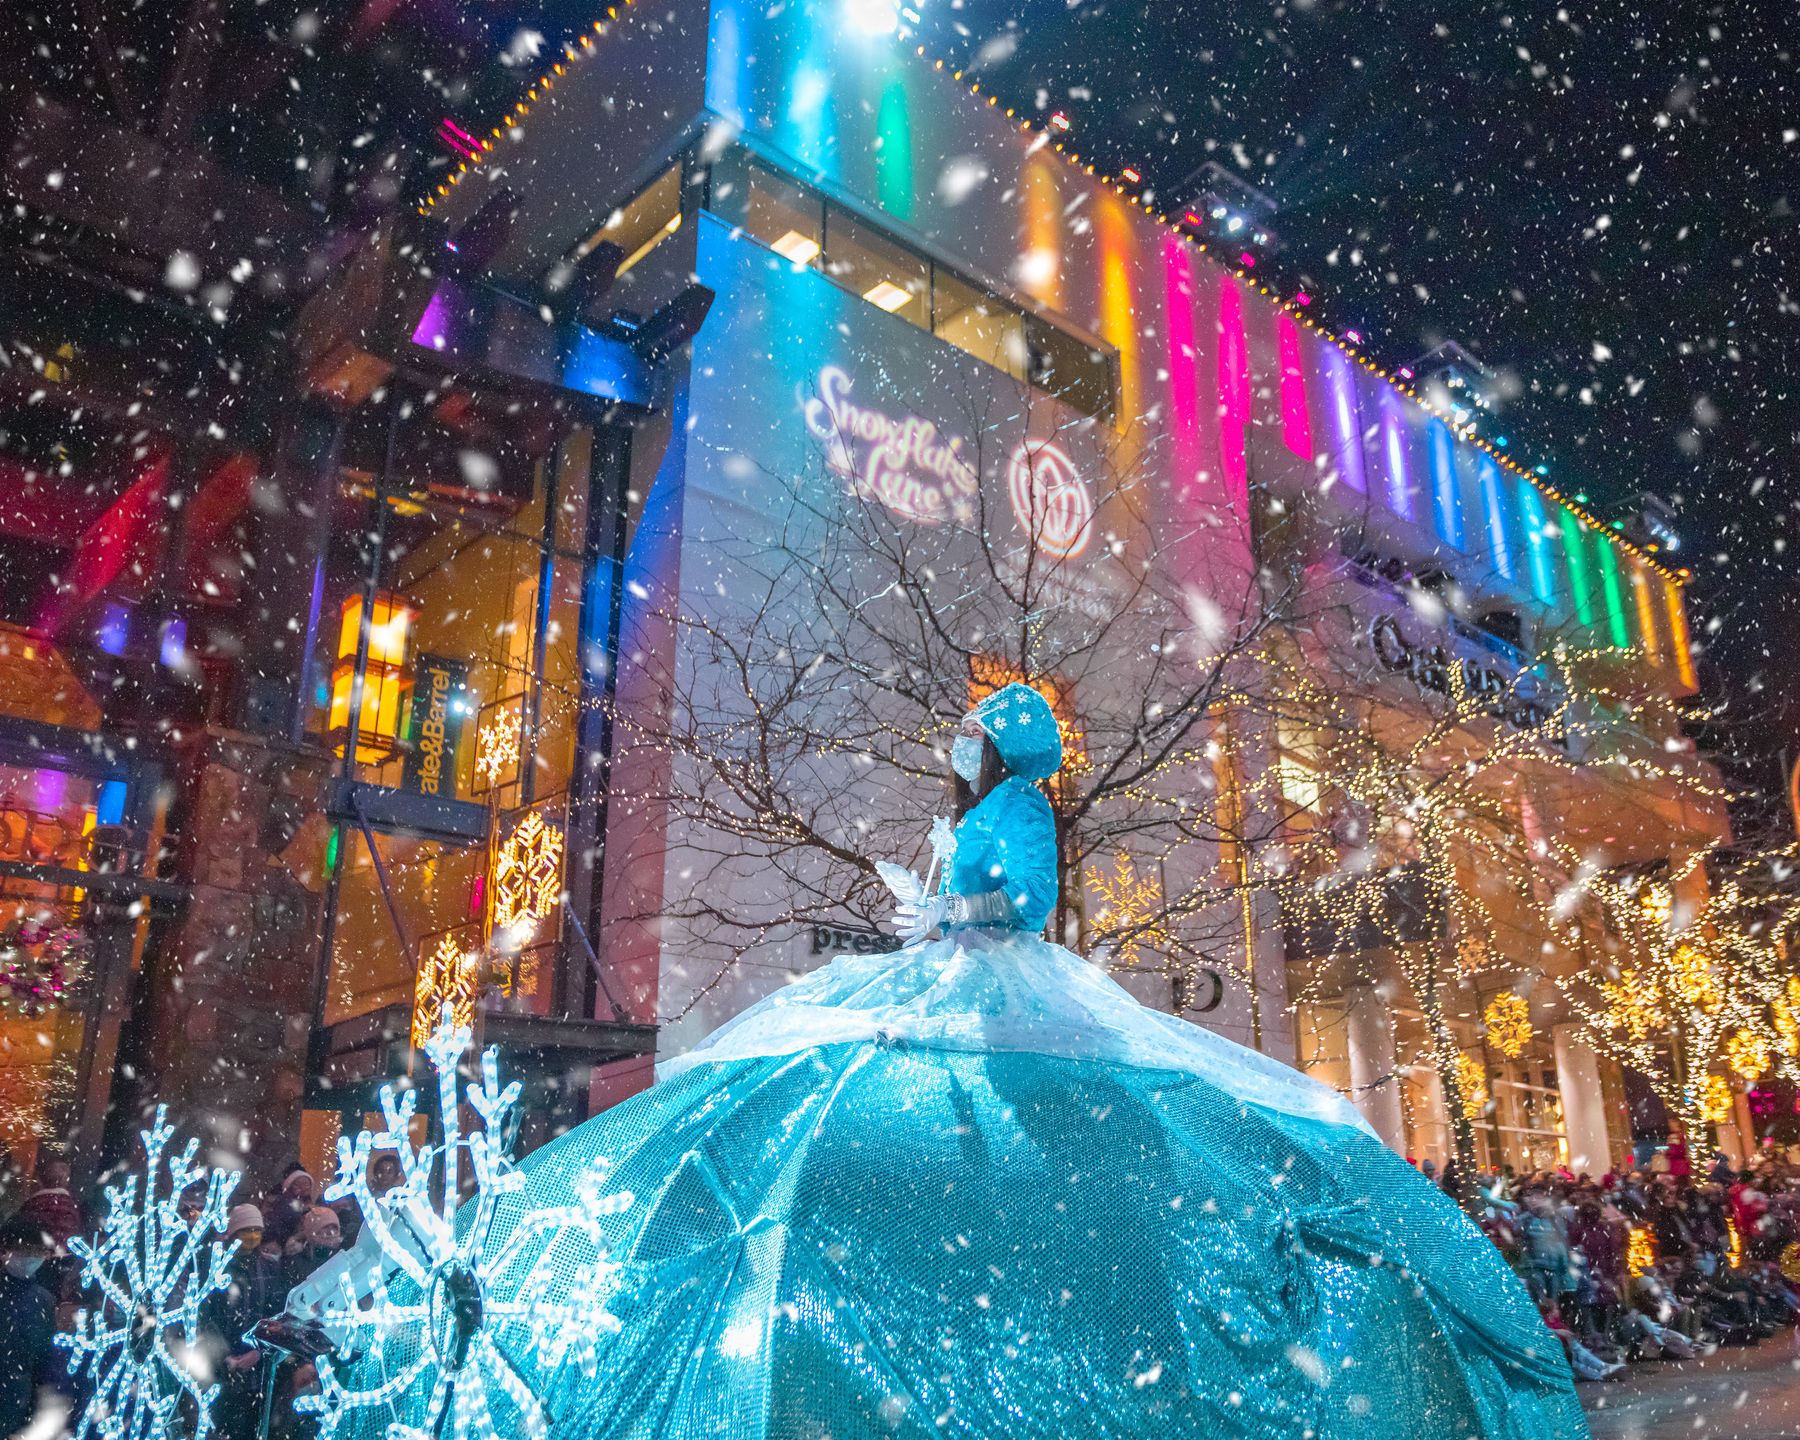 Snowflake Lane Brings Holiday Magic to Downtown Bellevue